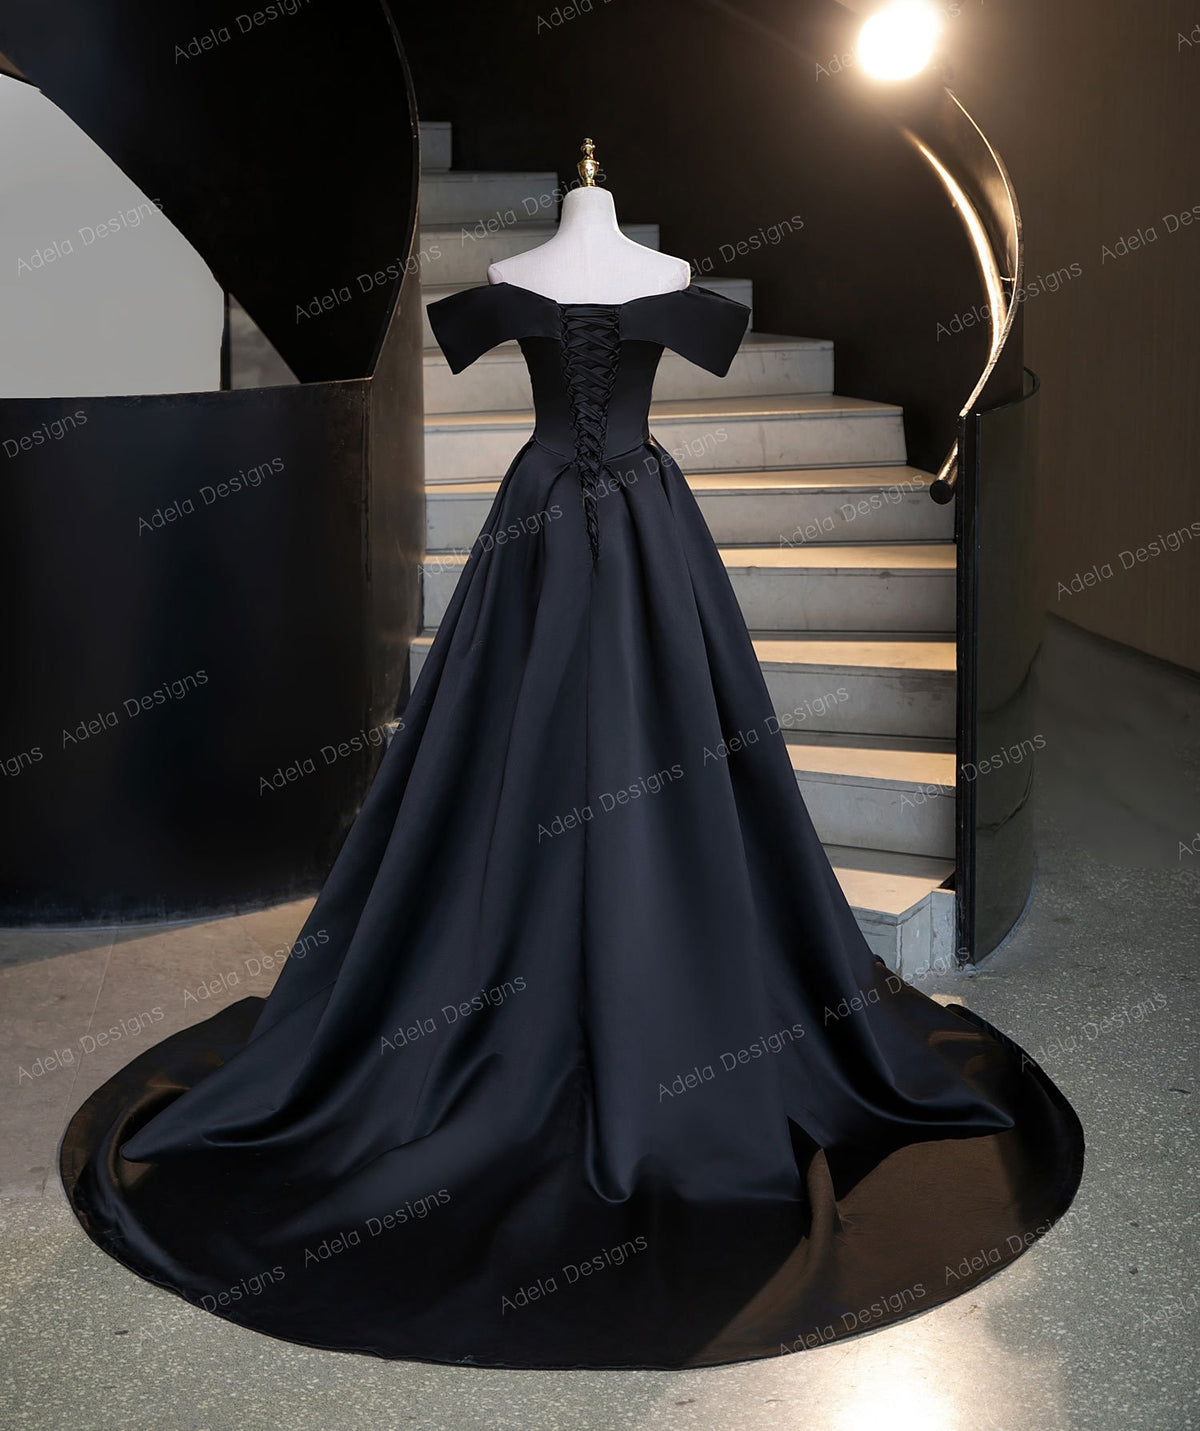 Classic Design Gothic Black Satin Wedding Dress Bridal Gown Off the Shoulder Neckline Open Back Aline with Corset Back